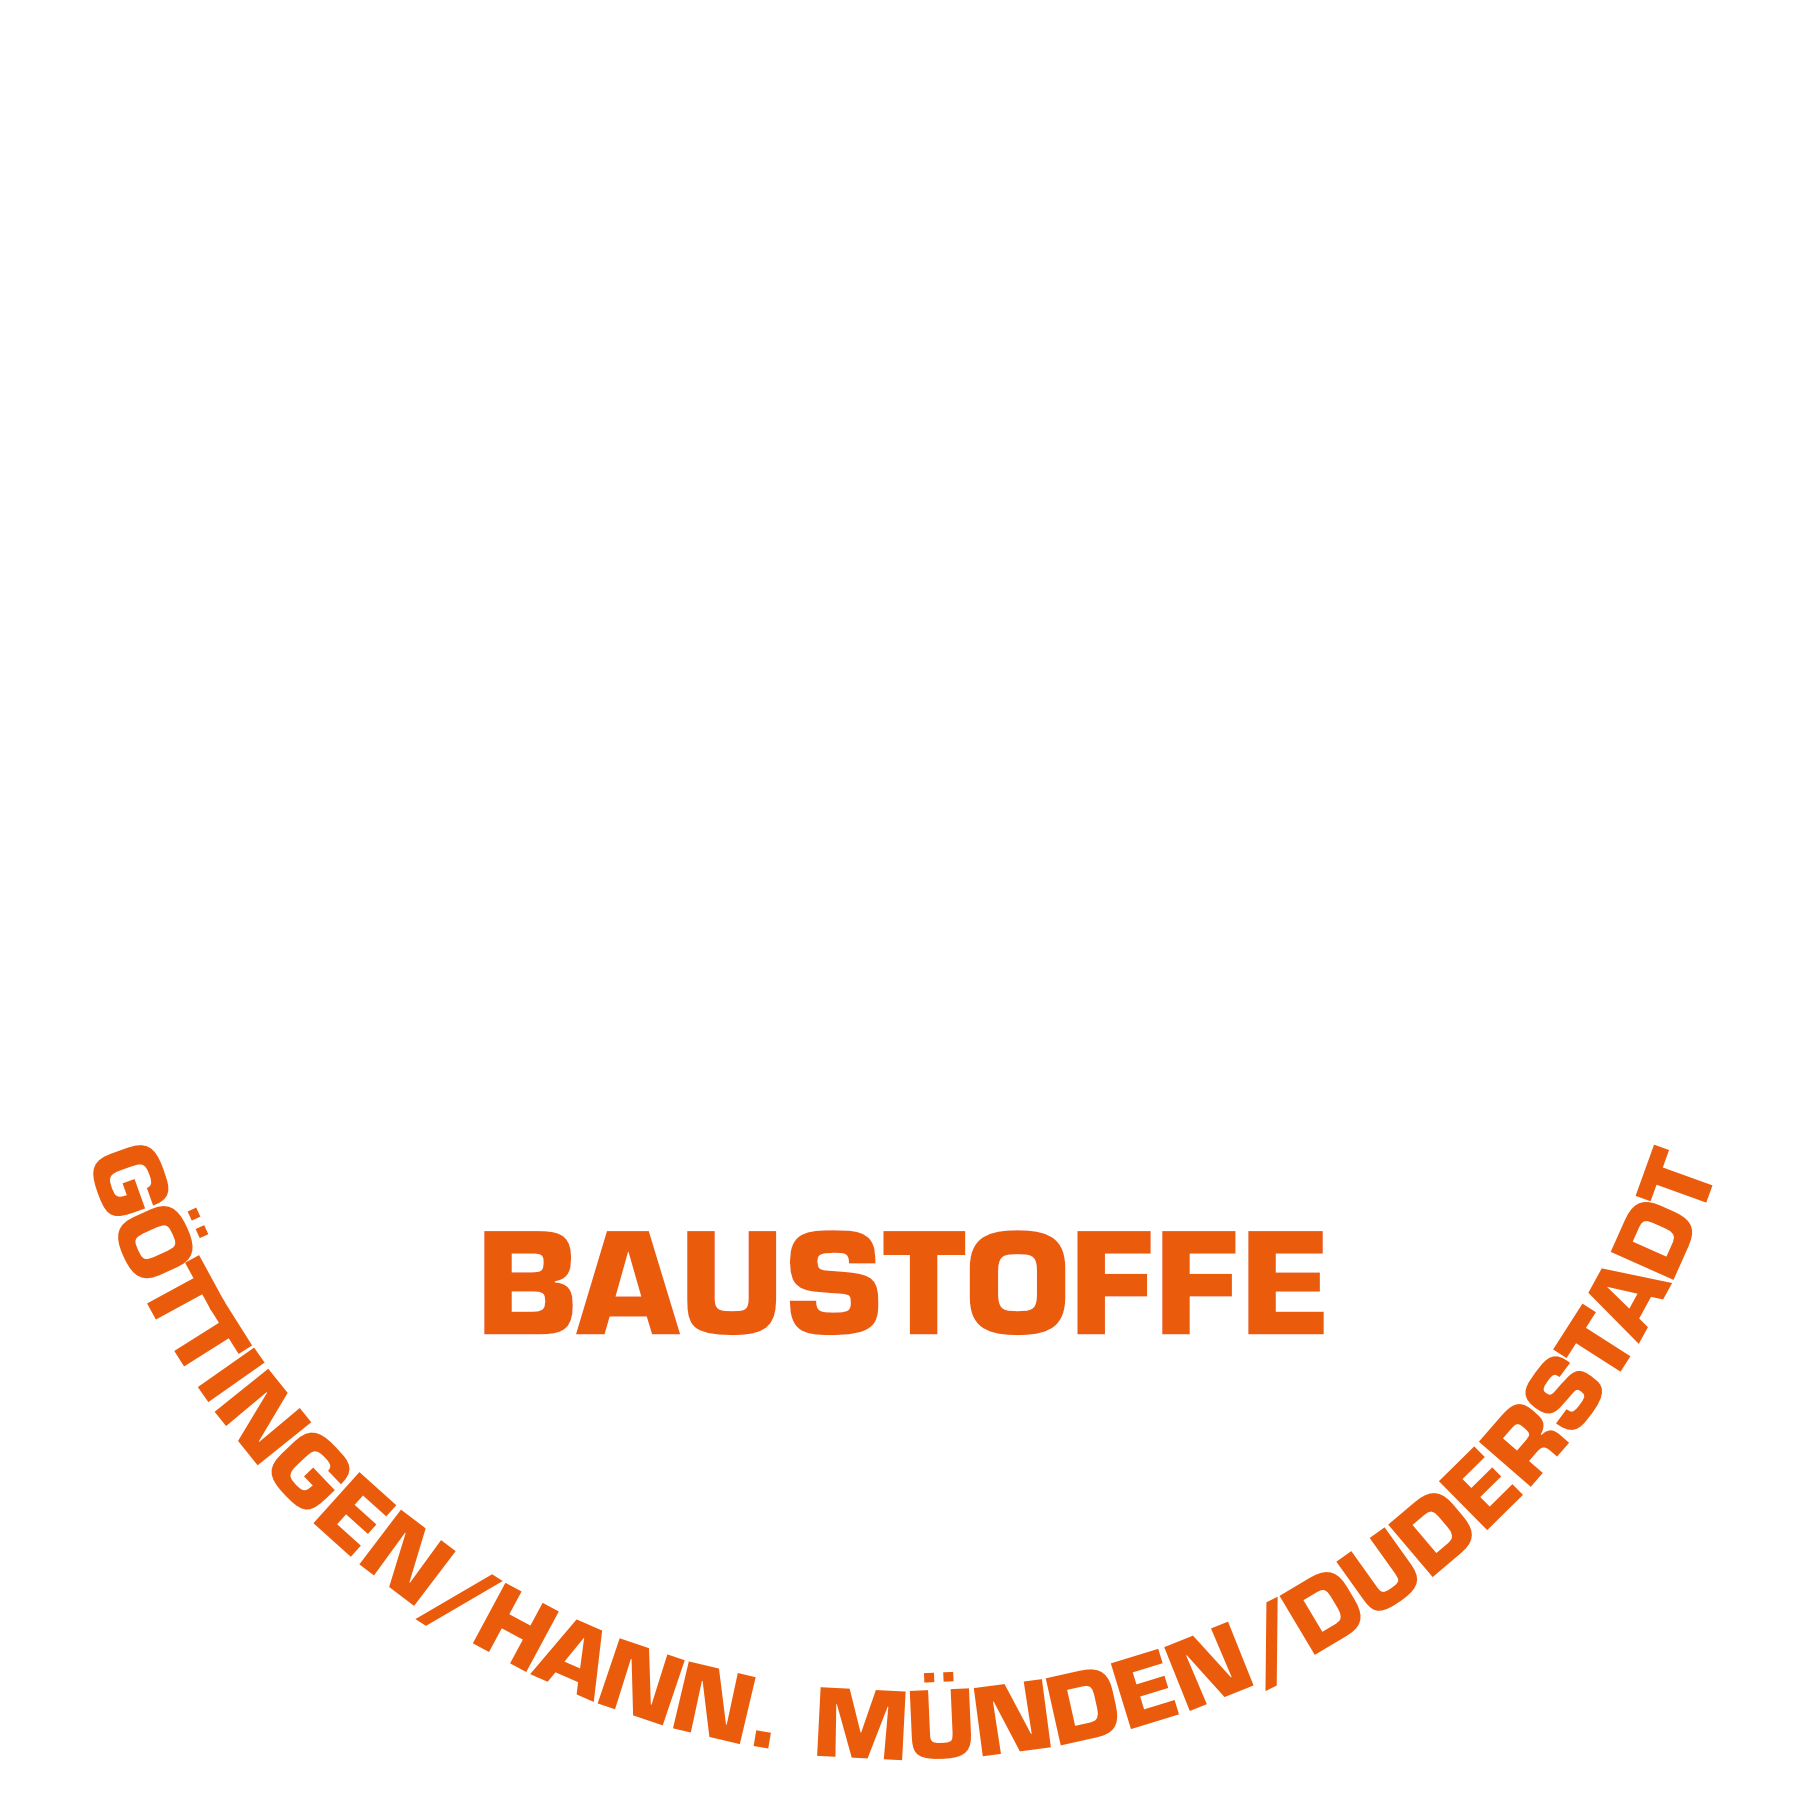 BHG BAUSTOFFMARKT GMBH & CO. KG